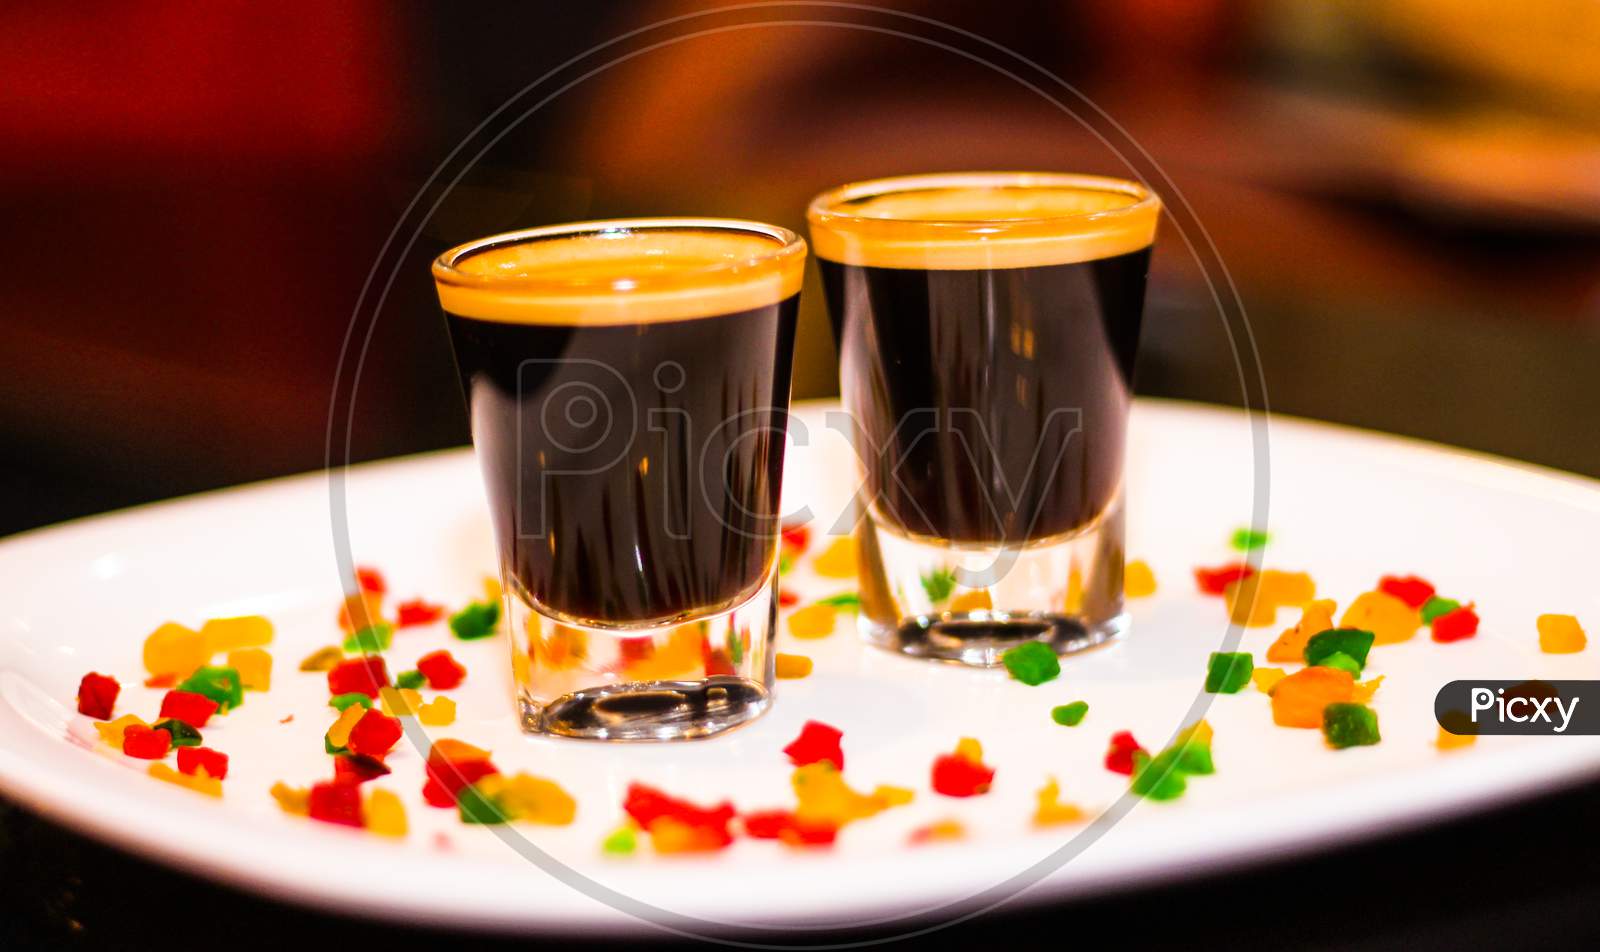 A Cups Of Expresso Espresso Shots